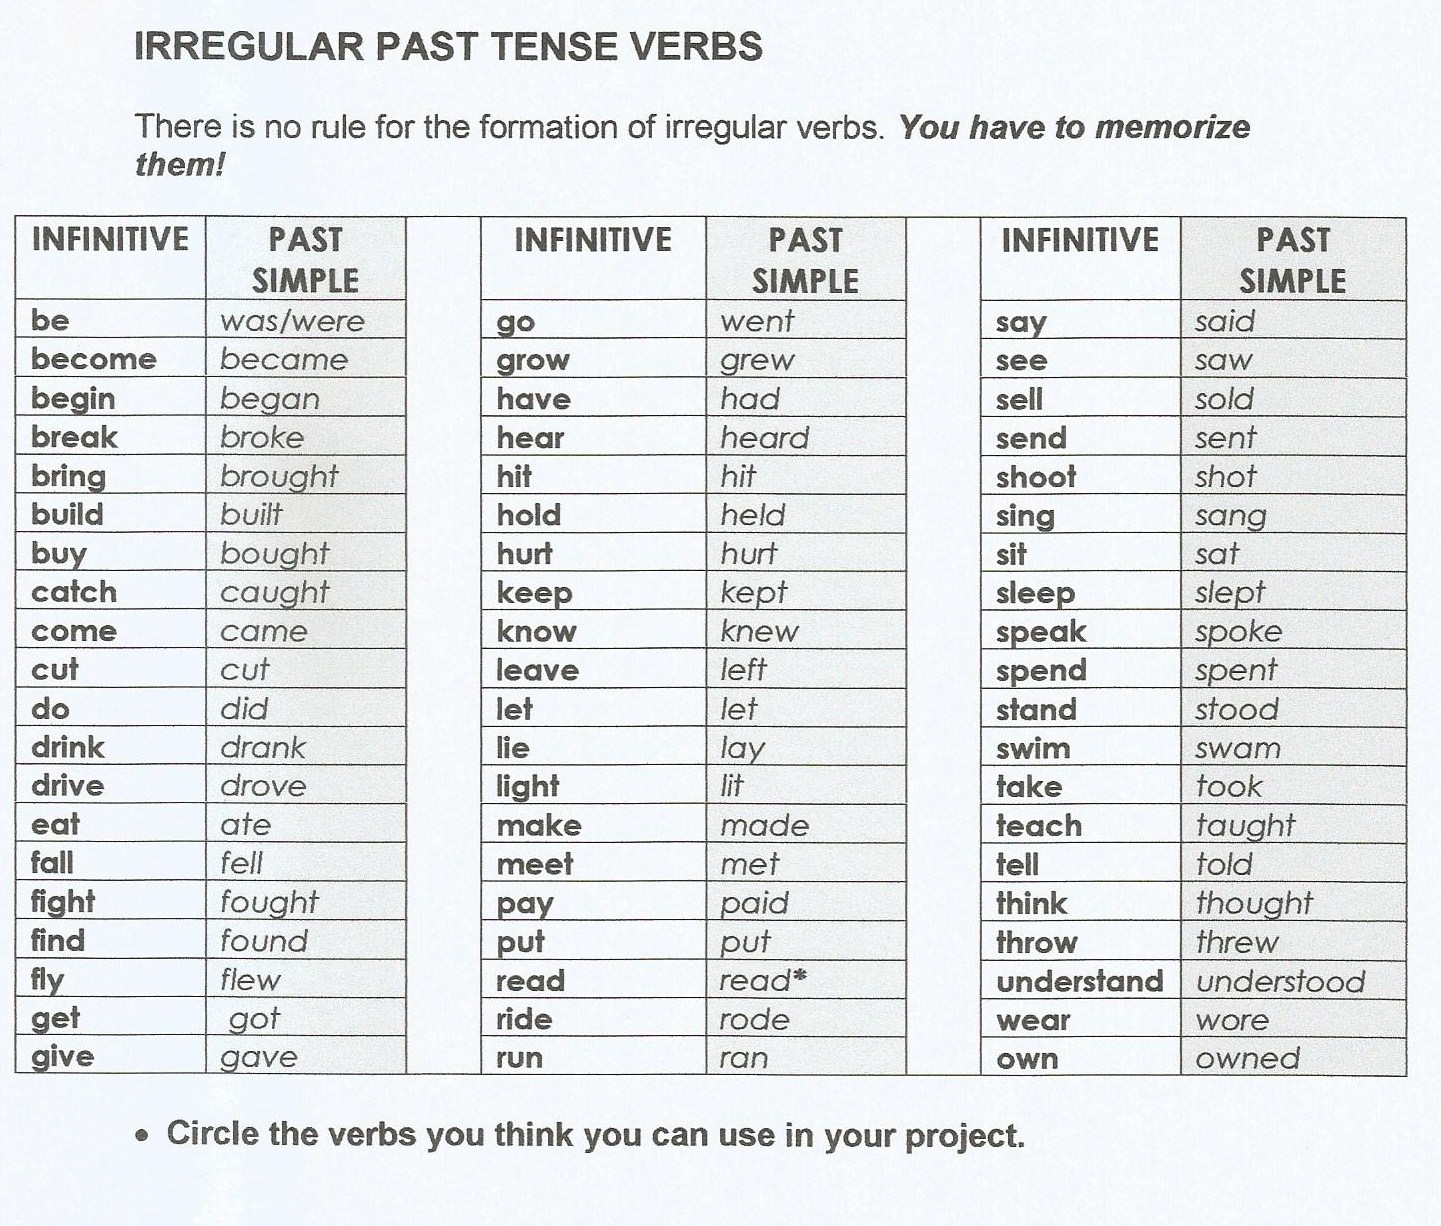 16-best-images-of-verb-tense-exercises-worksheet-irregular-past-tense